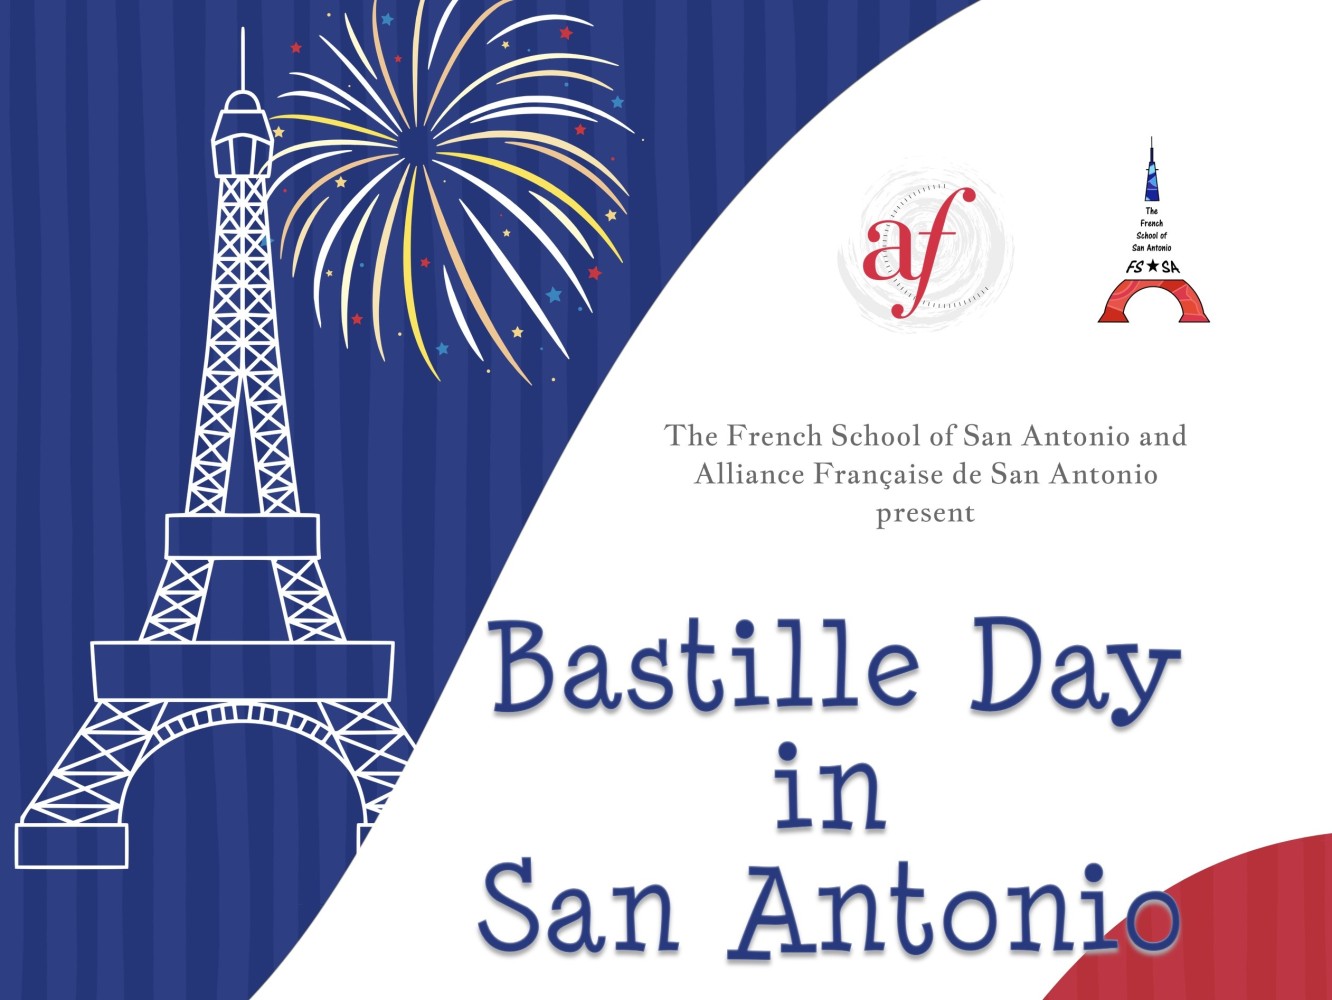 AF de SA announces Bastille Day 2018 celebration